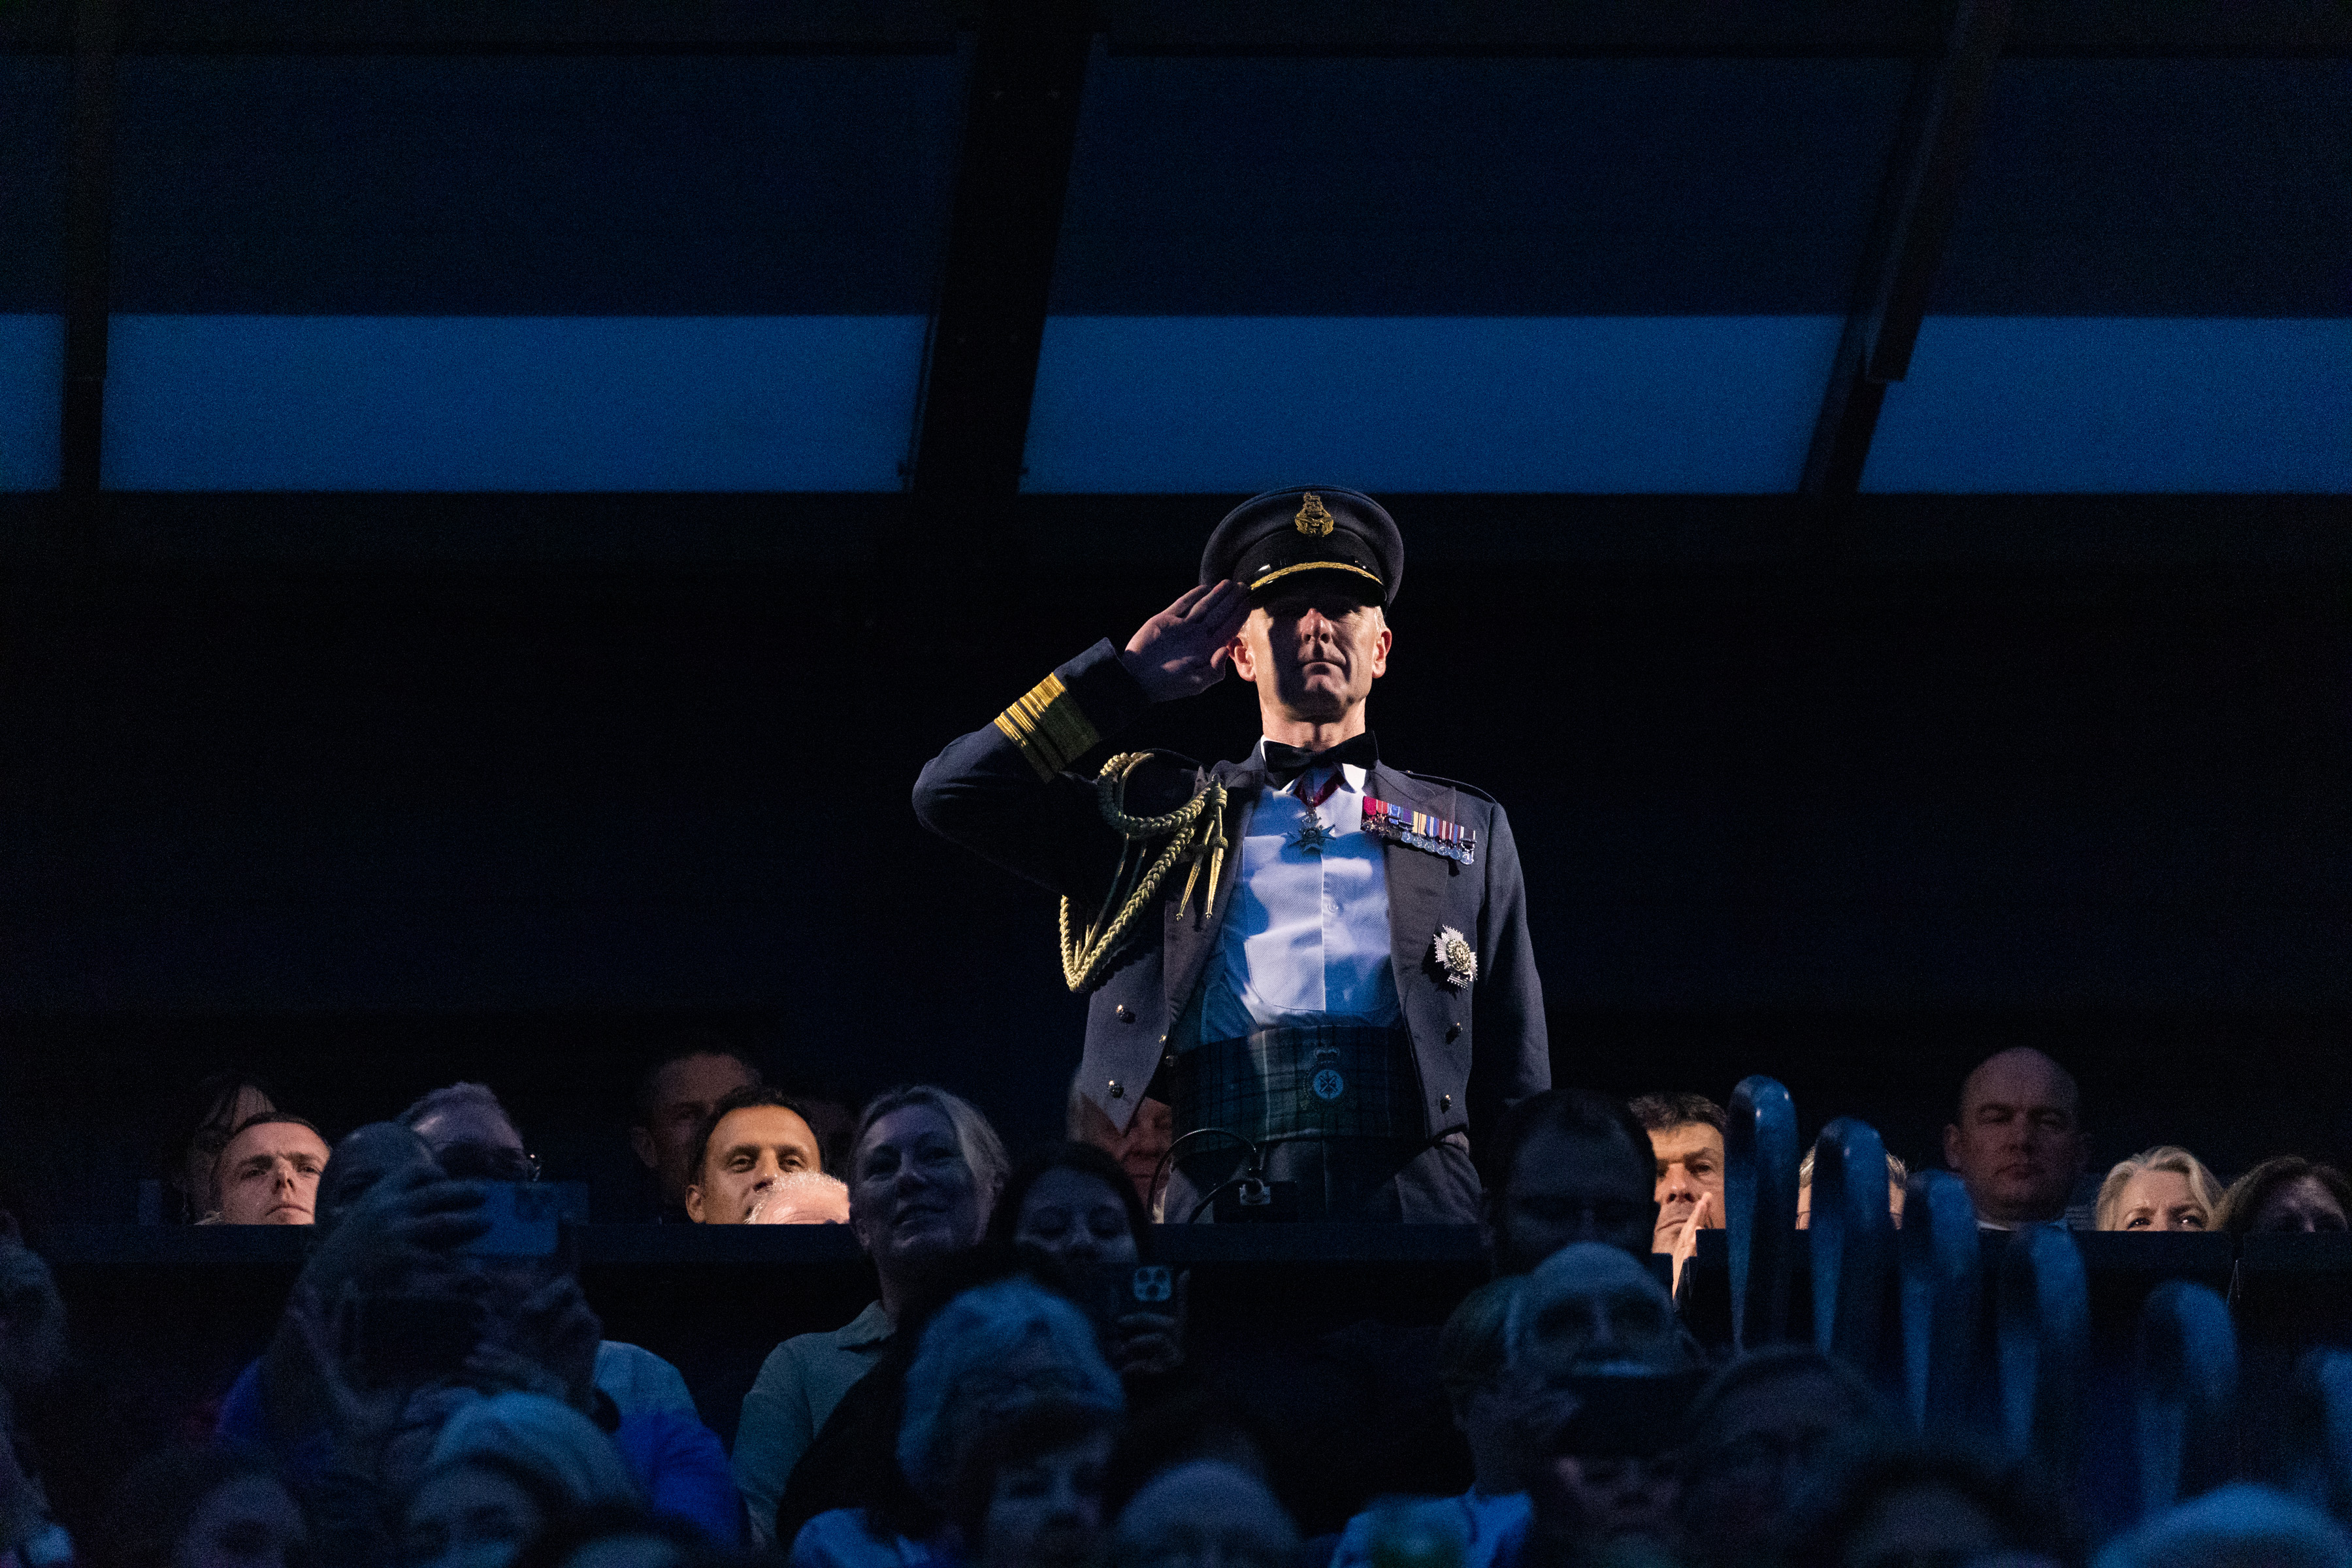 Image shows RAF aviator saluting amid public crowd.